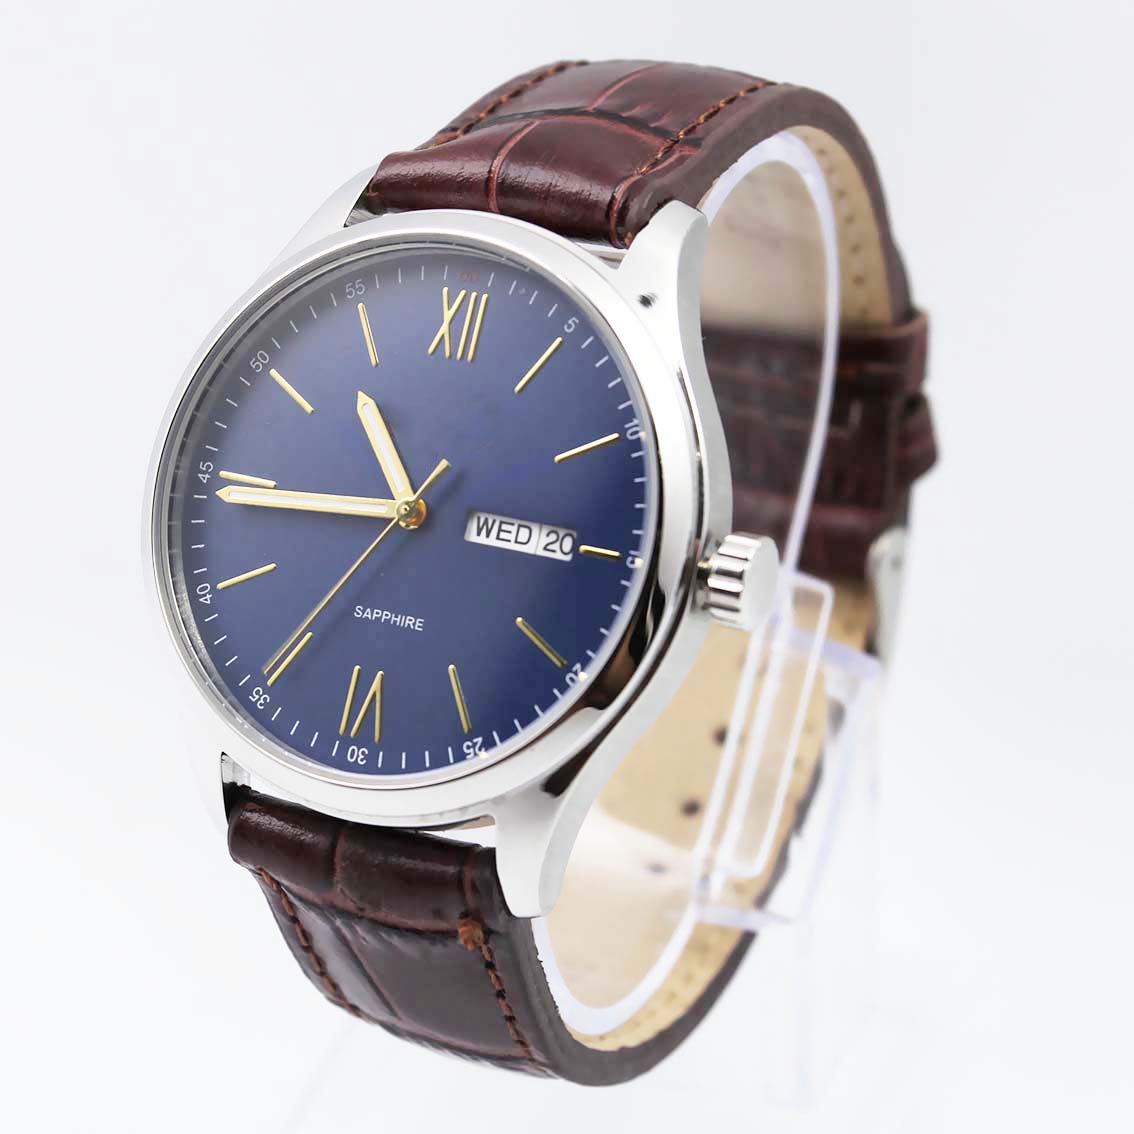 #02084Men's wristwatch quartz analog leather strap watch